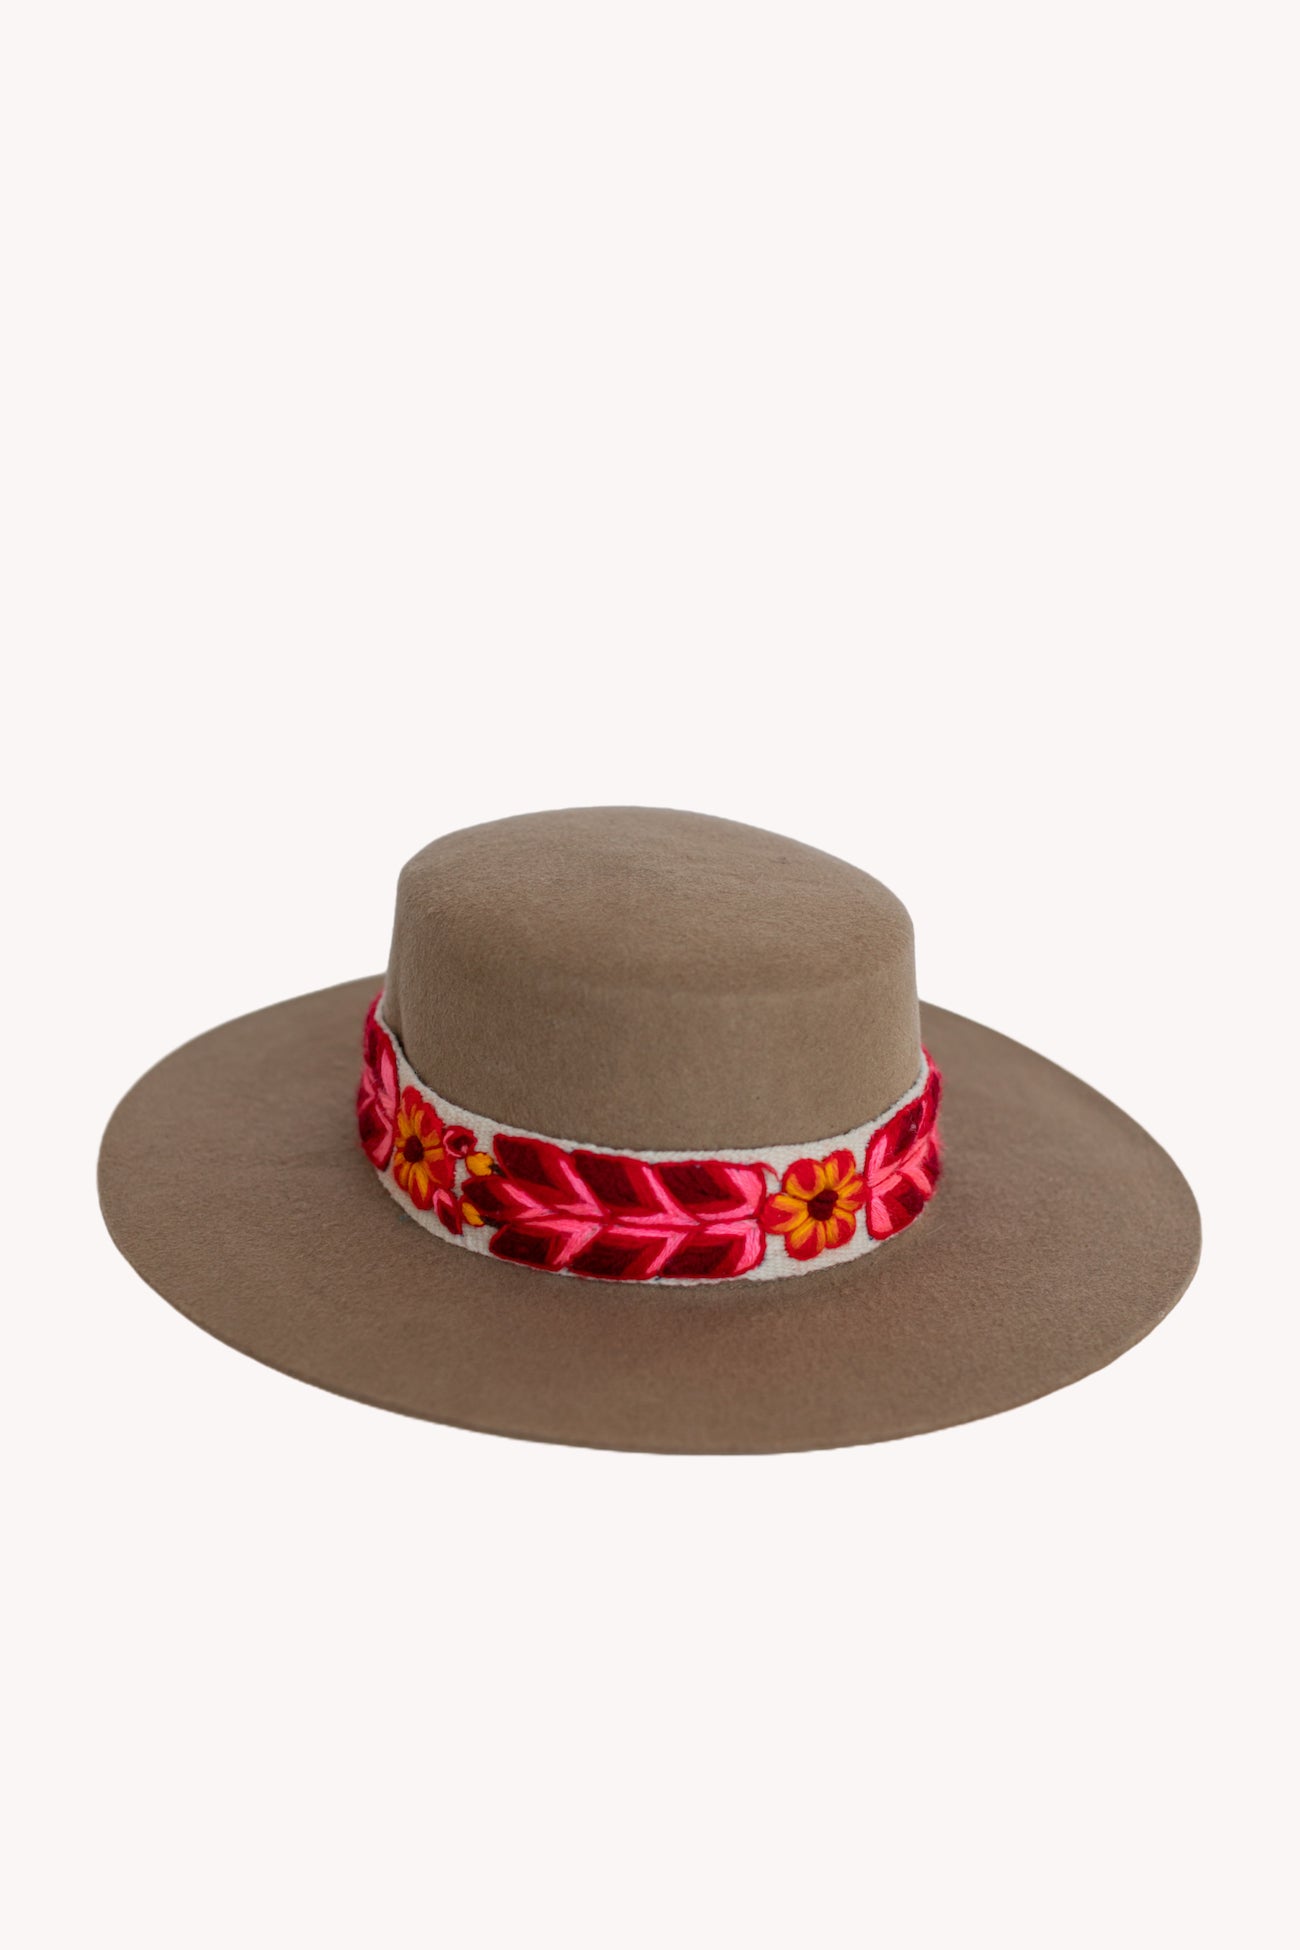 Beige Spanish style alpaca wool handmade hat